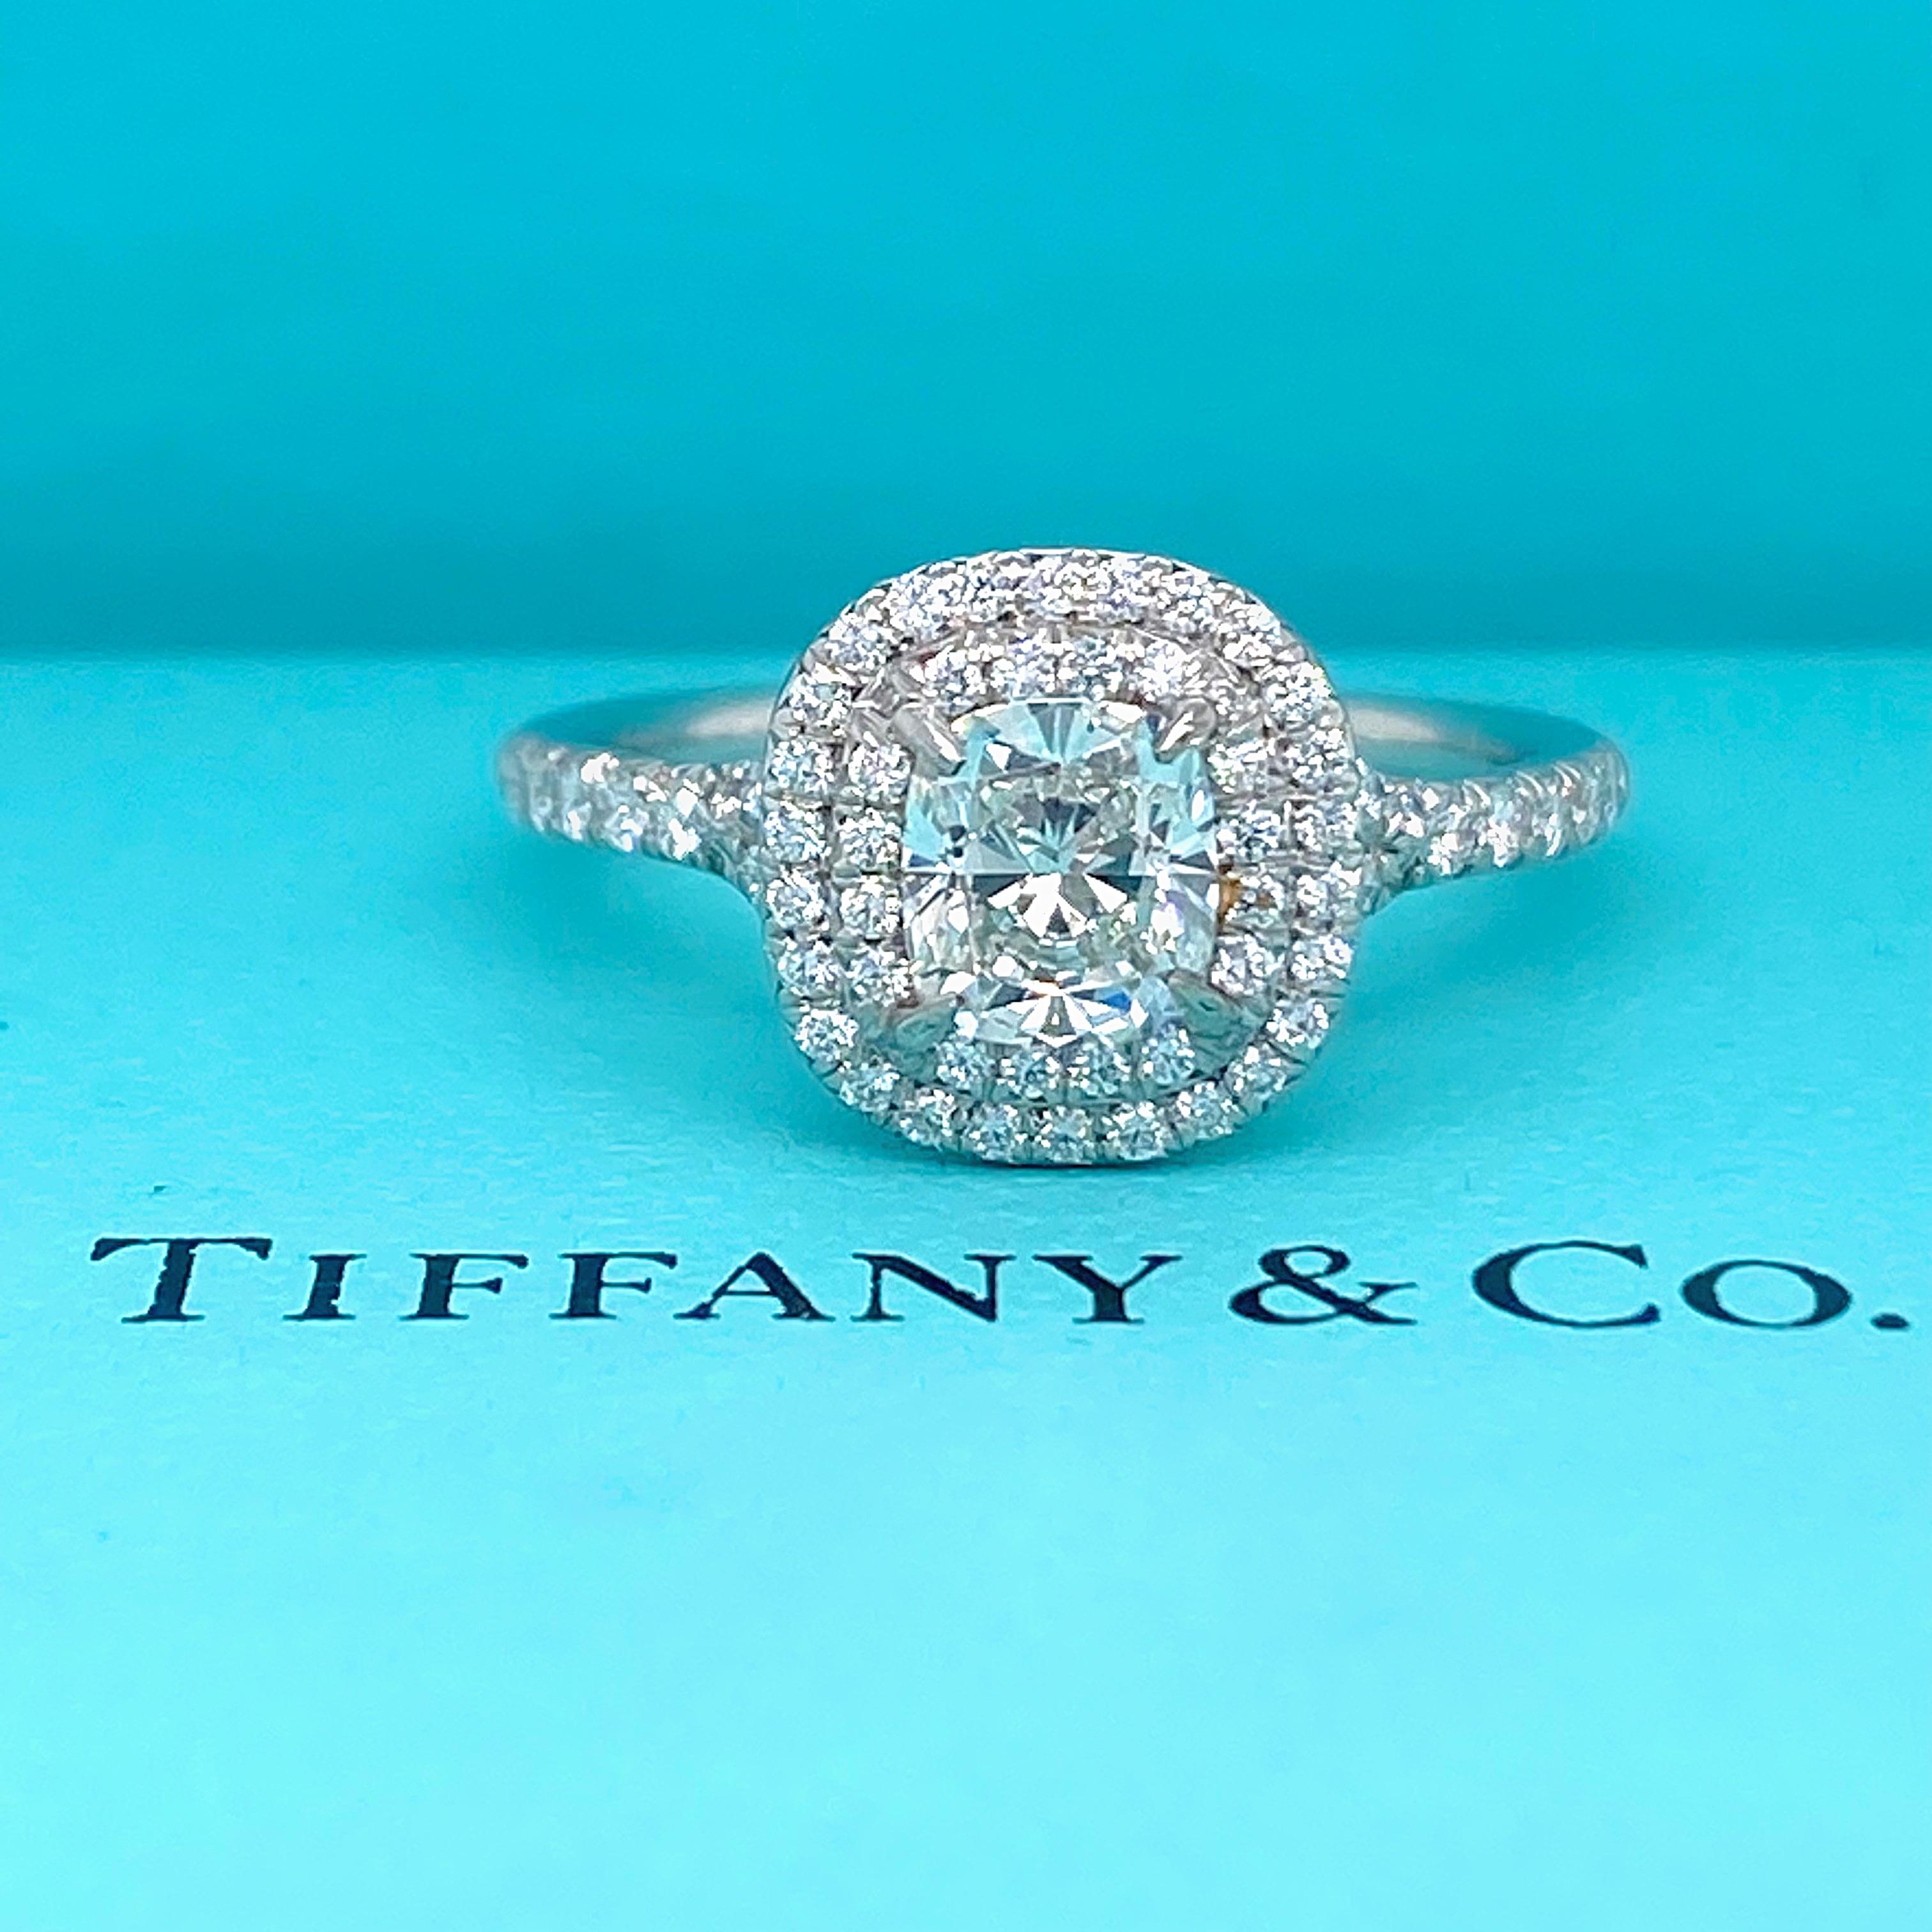 TIFFANY & CO Soleste Diamond Engagement Ring
Style:  Double Halo 
Diamond Number:  34823499
Metal:  Platinum
Size:  6.5 sizable
TCW:  1.45 tcw
Main Diamond:  Cushion Brilliant Diamond 1.00 cts
Color & Clarity:  I, VS1
Accent Diamonds:  72 Round